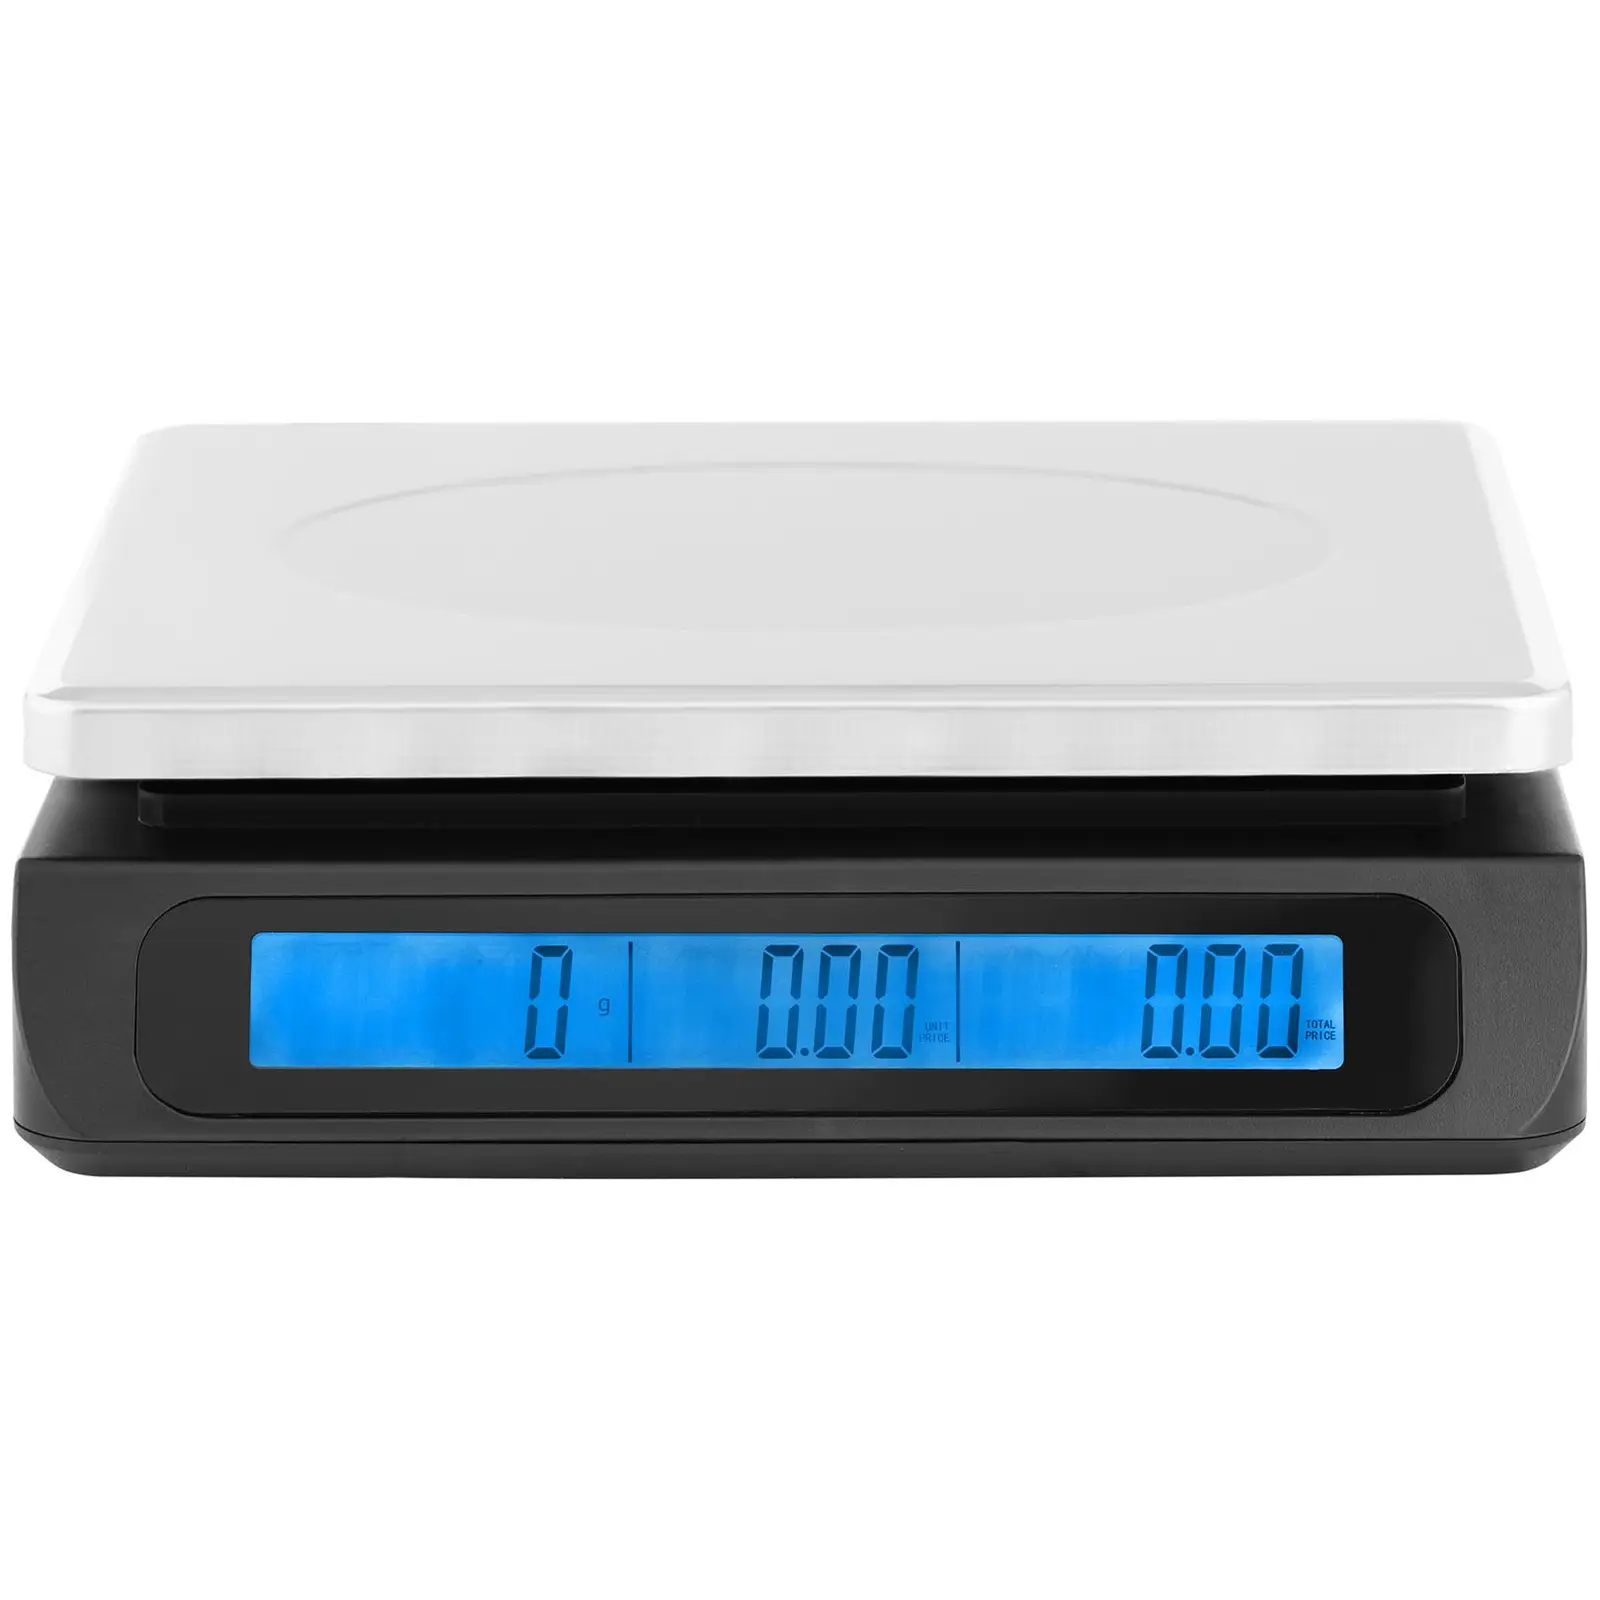 Bilancia digitale - 30 kg/1 g - Display LCD doppio